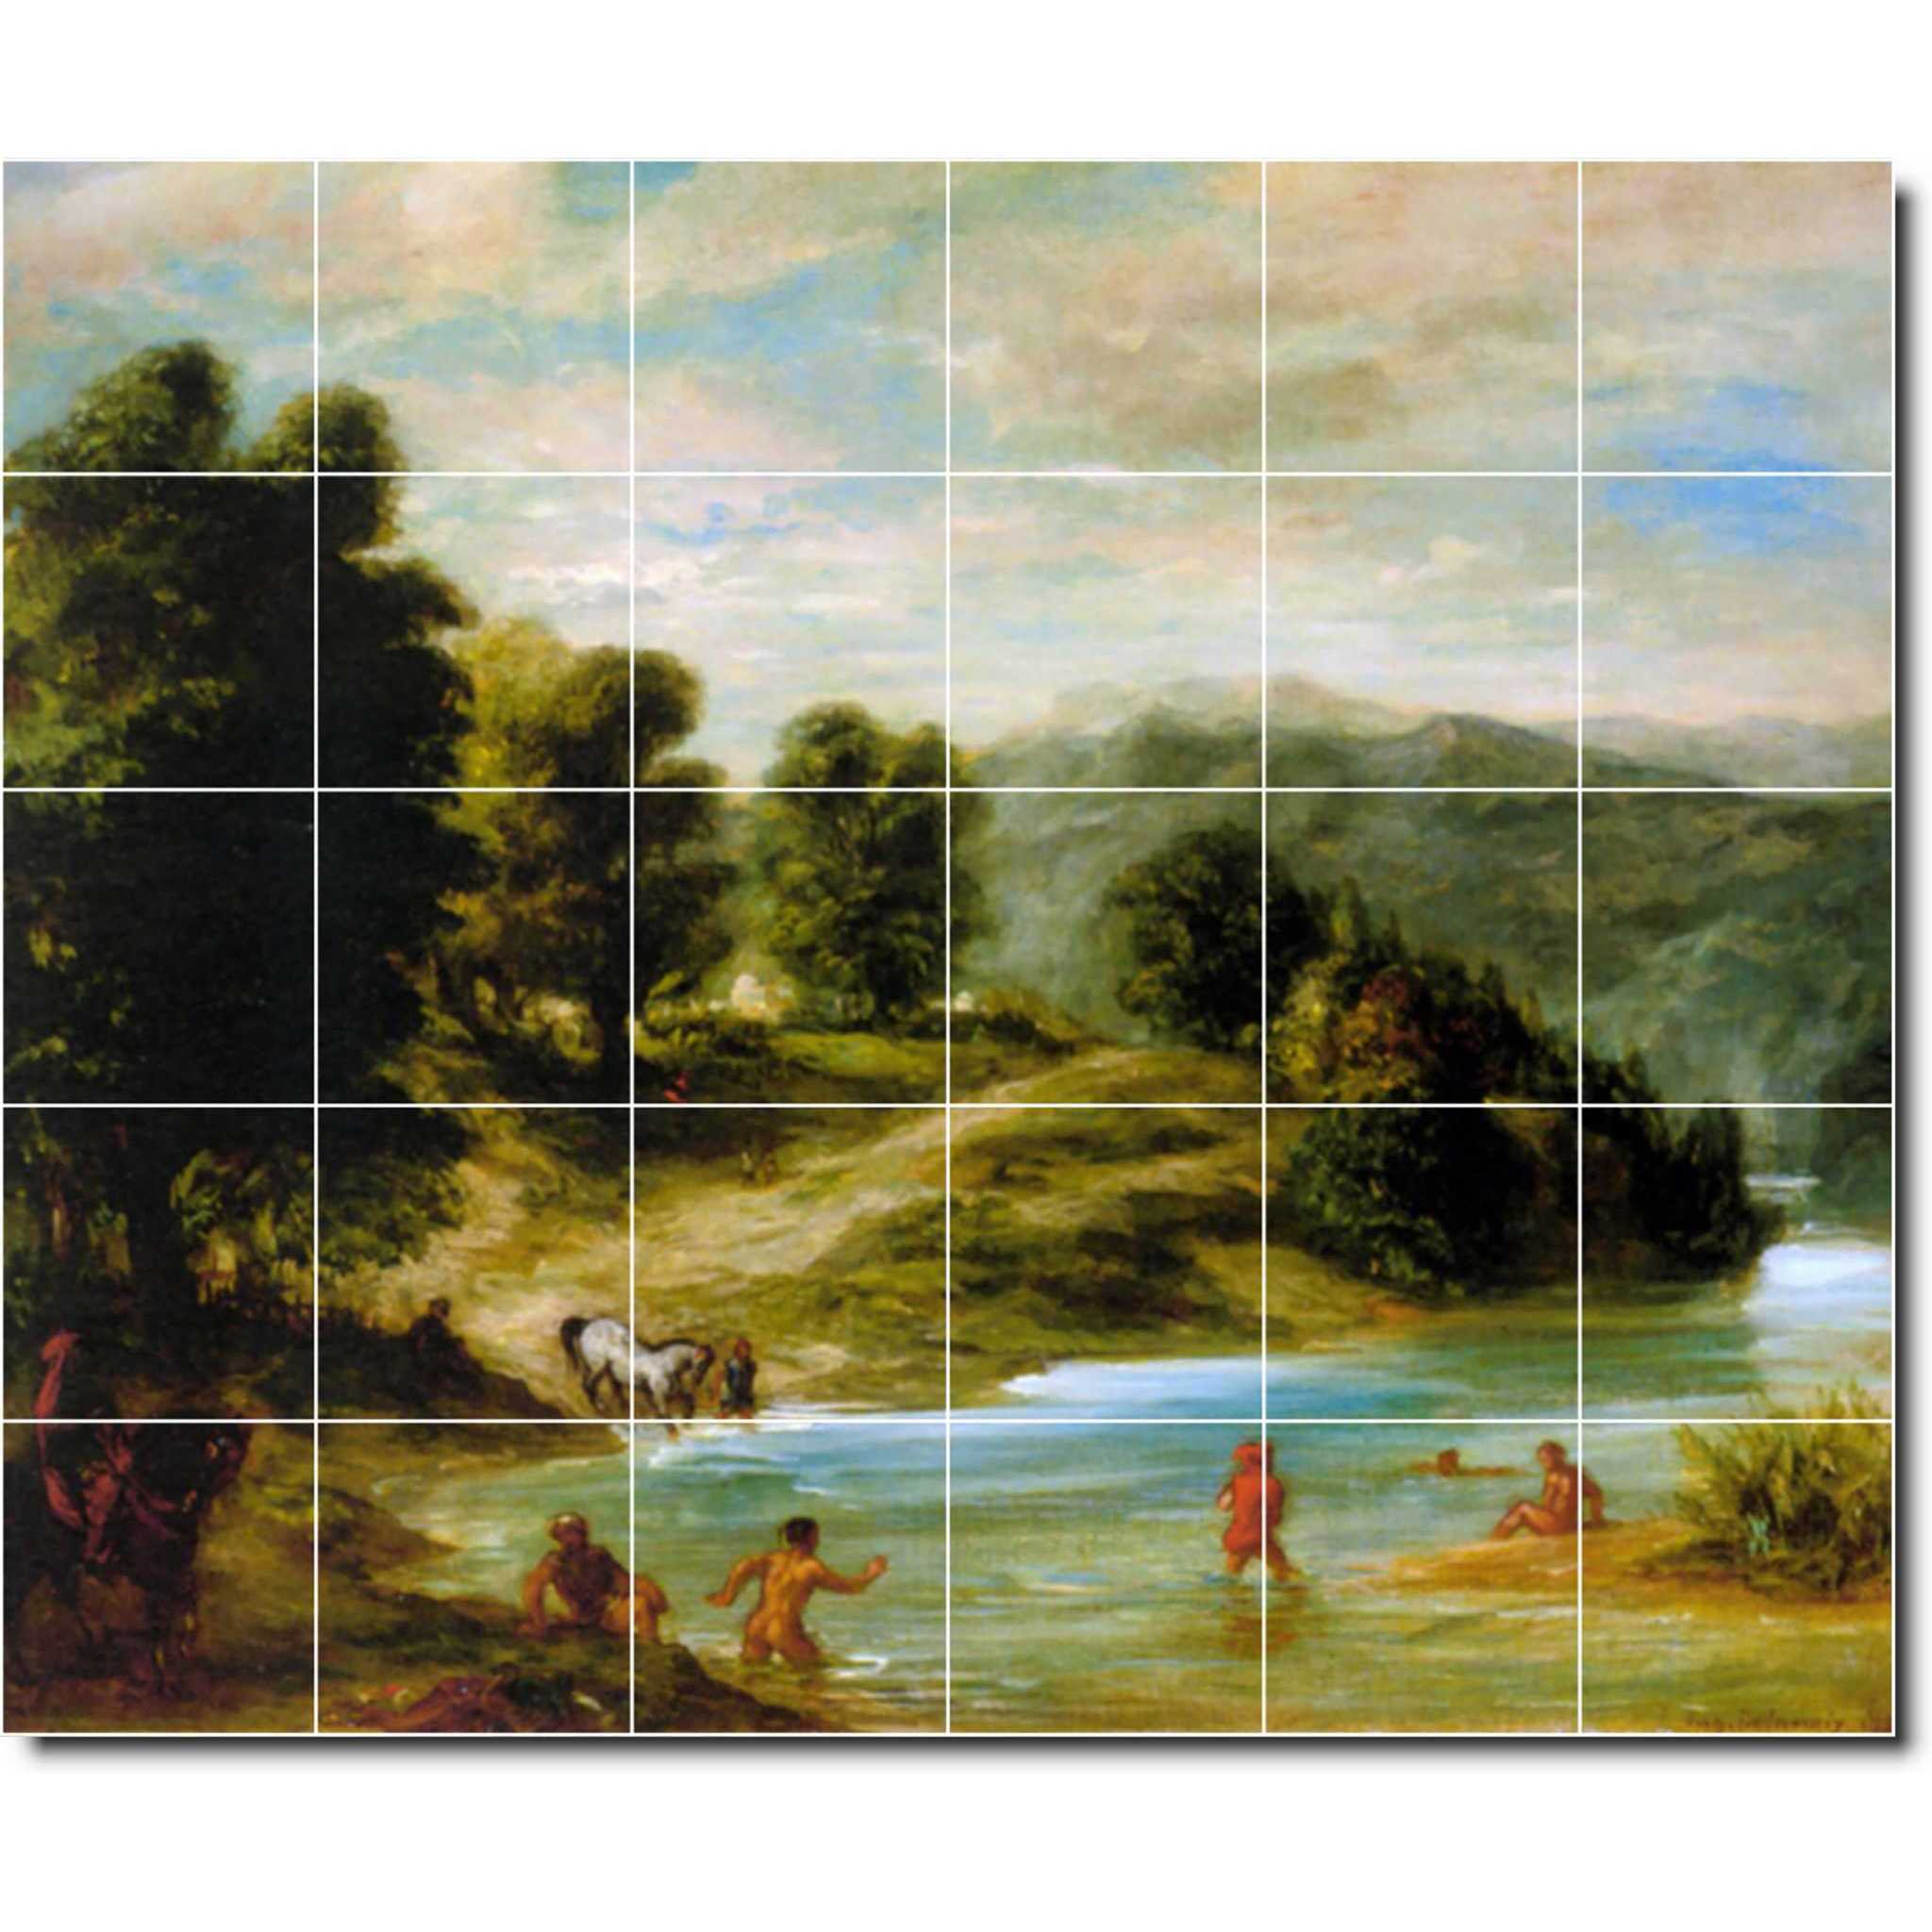 eugene delacroix landscape painting ceramic tile mural p02530